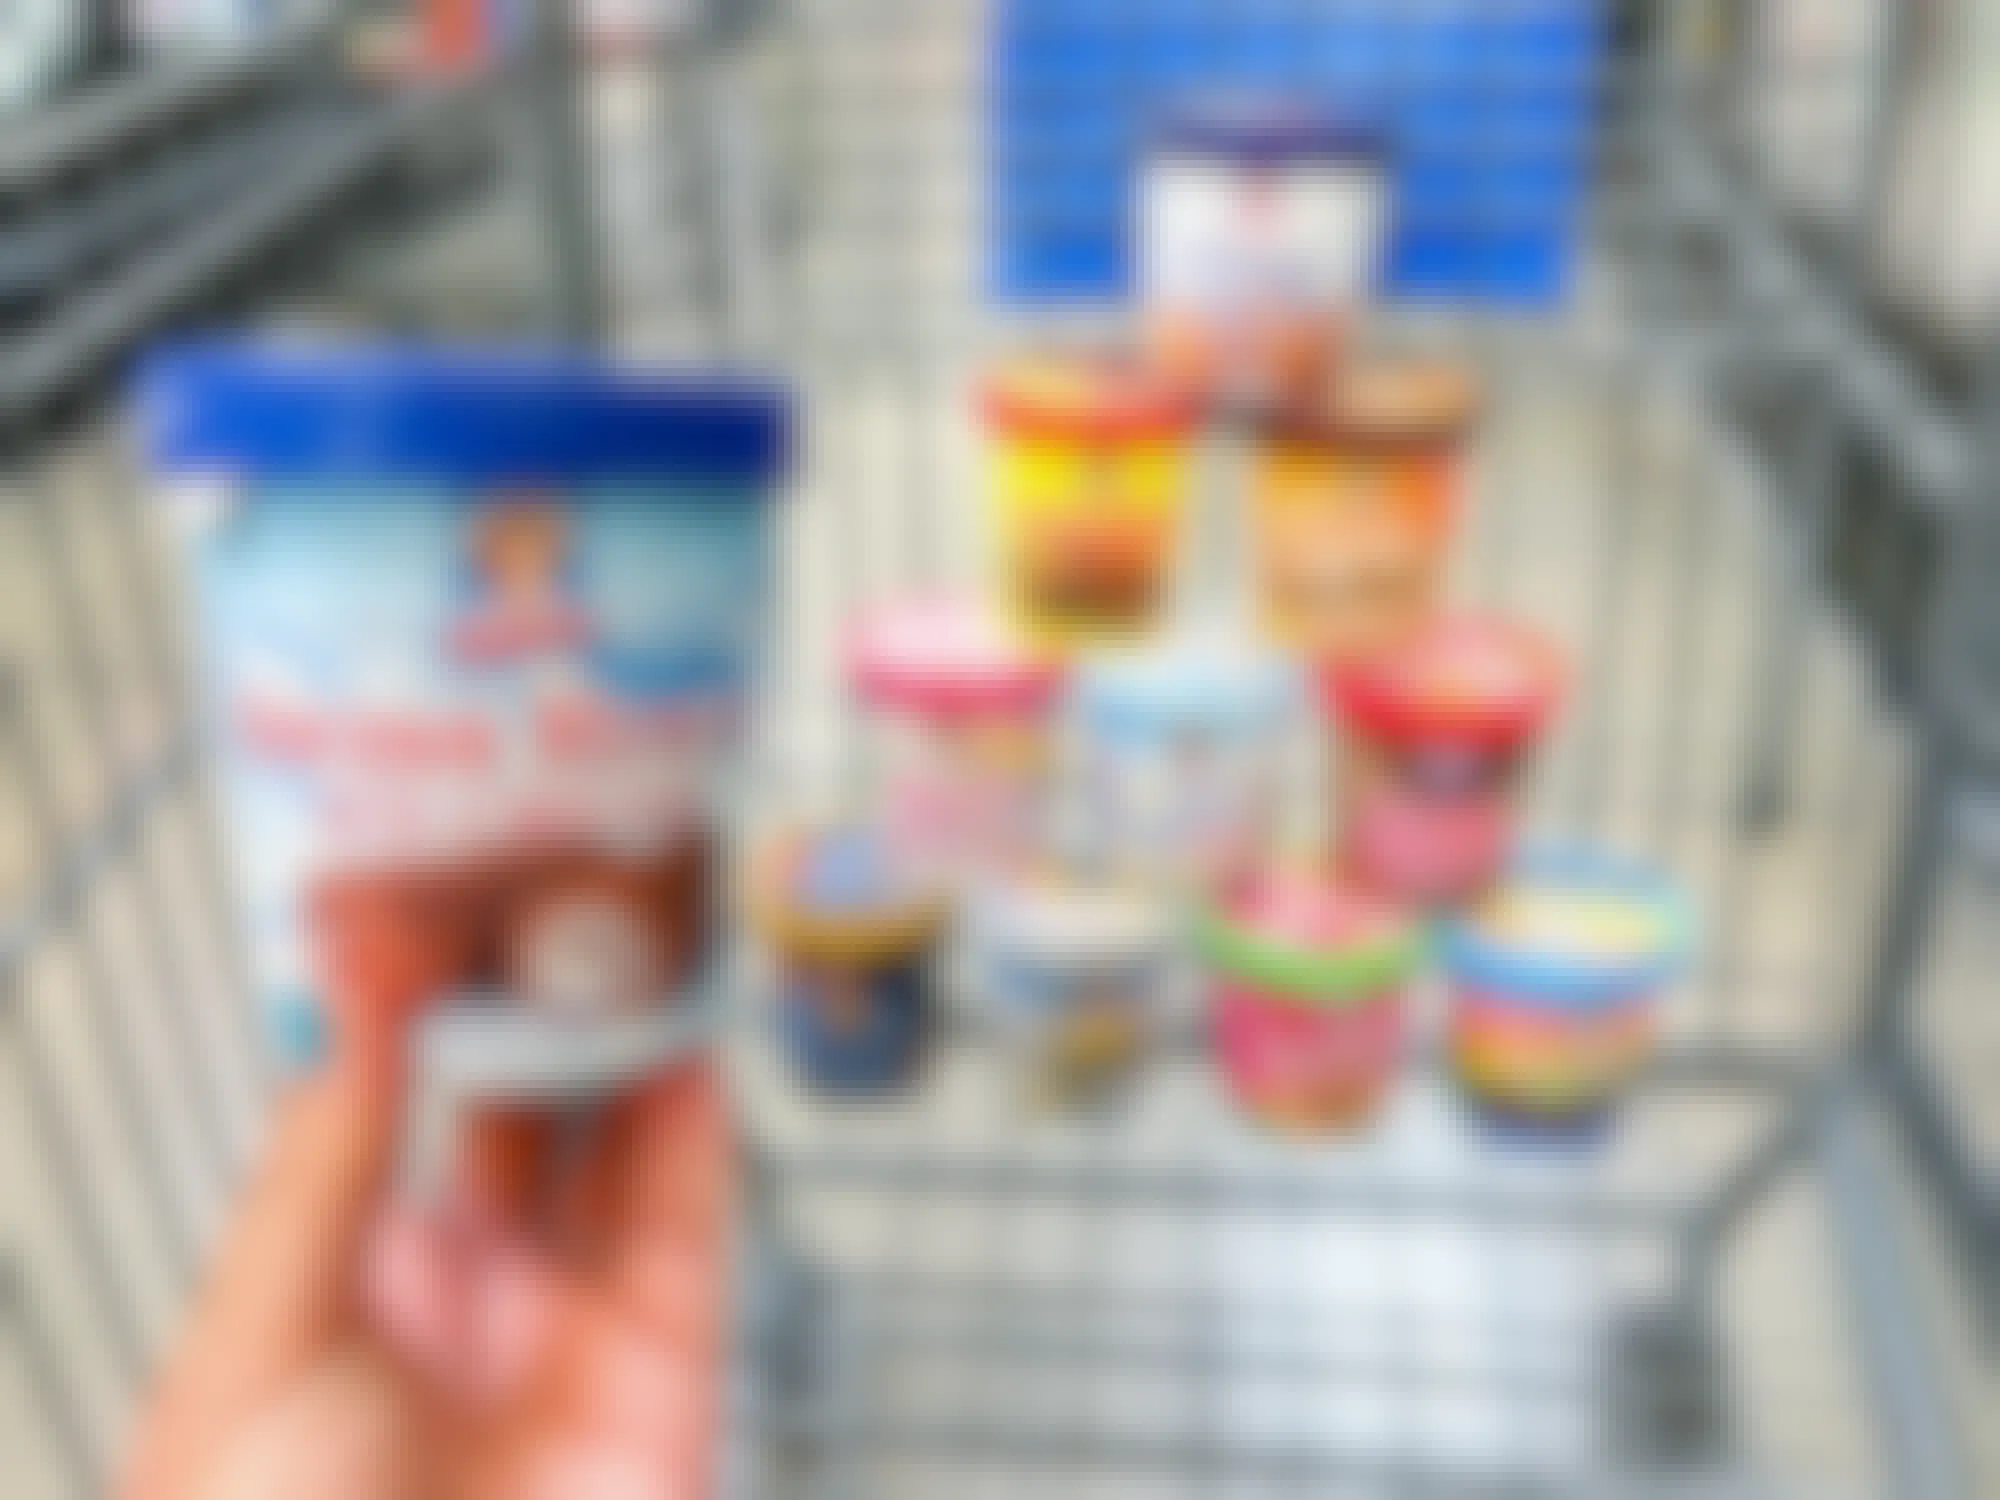 Some Little Debbie dessert flavored ice cream pints in a Walmart cart